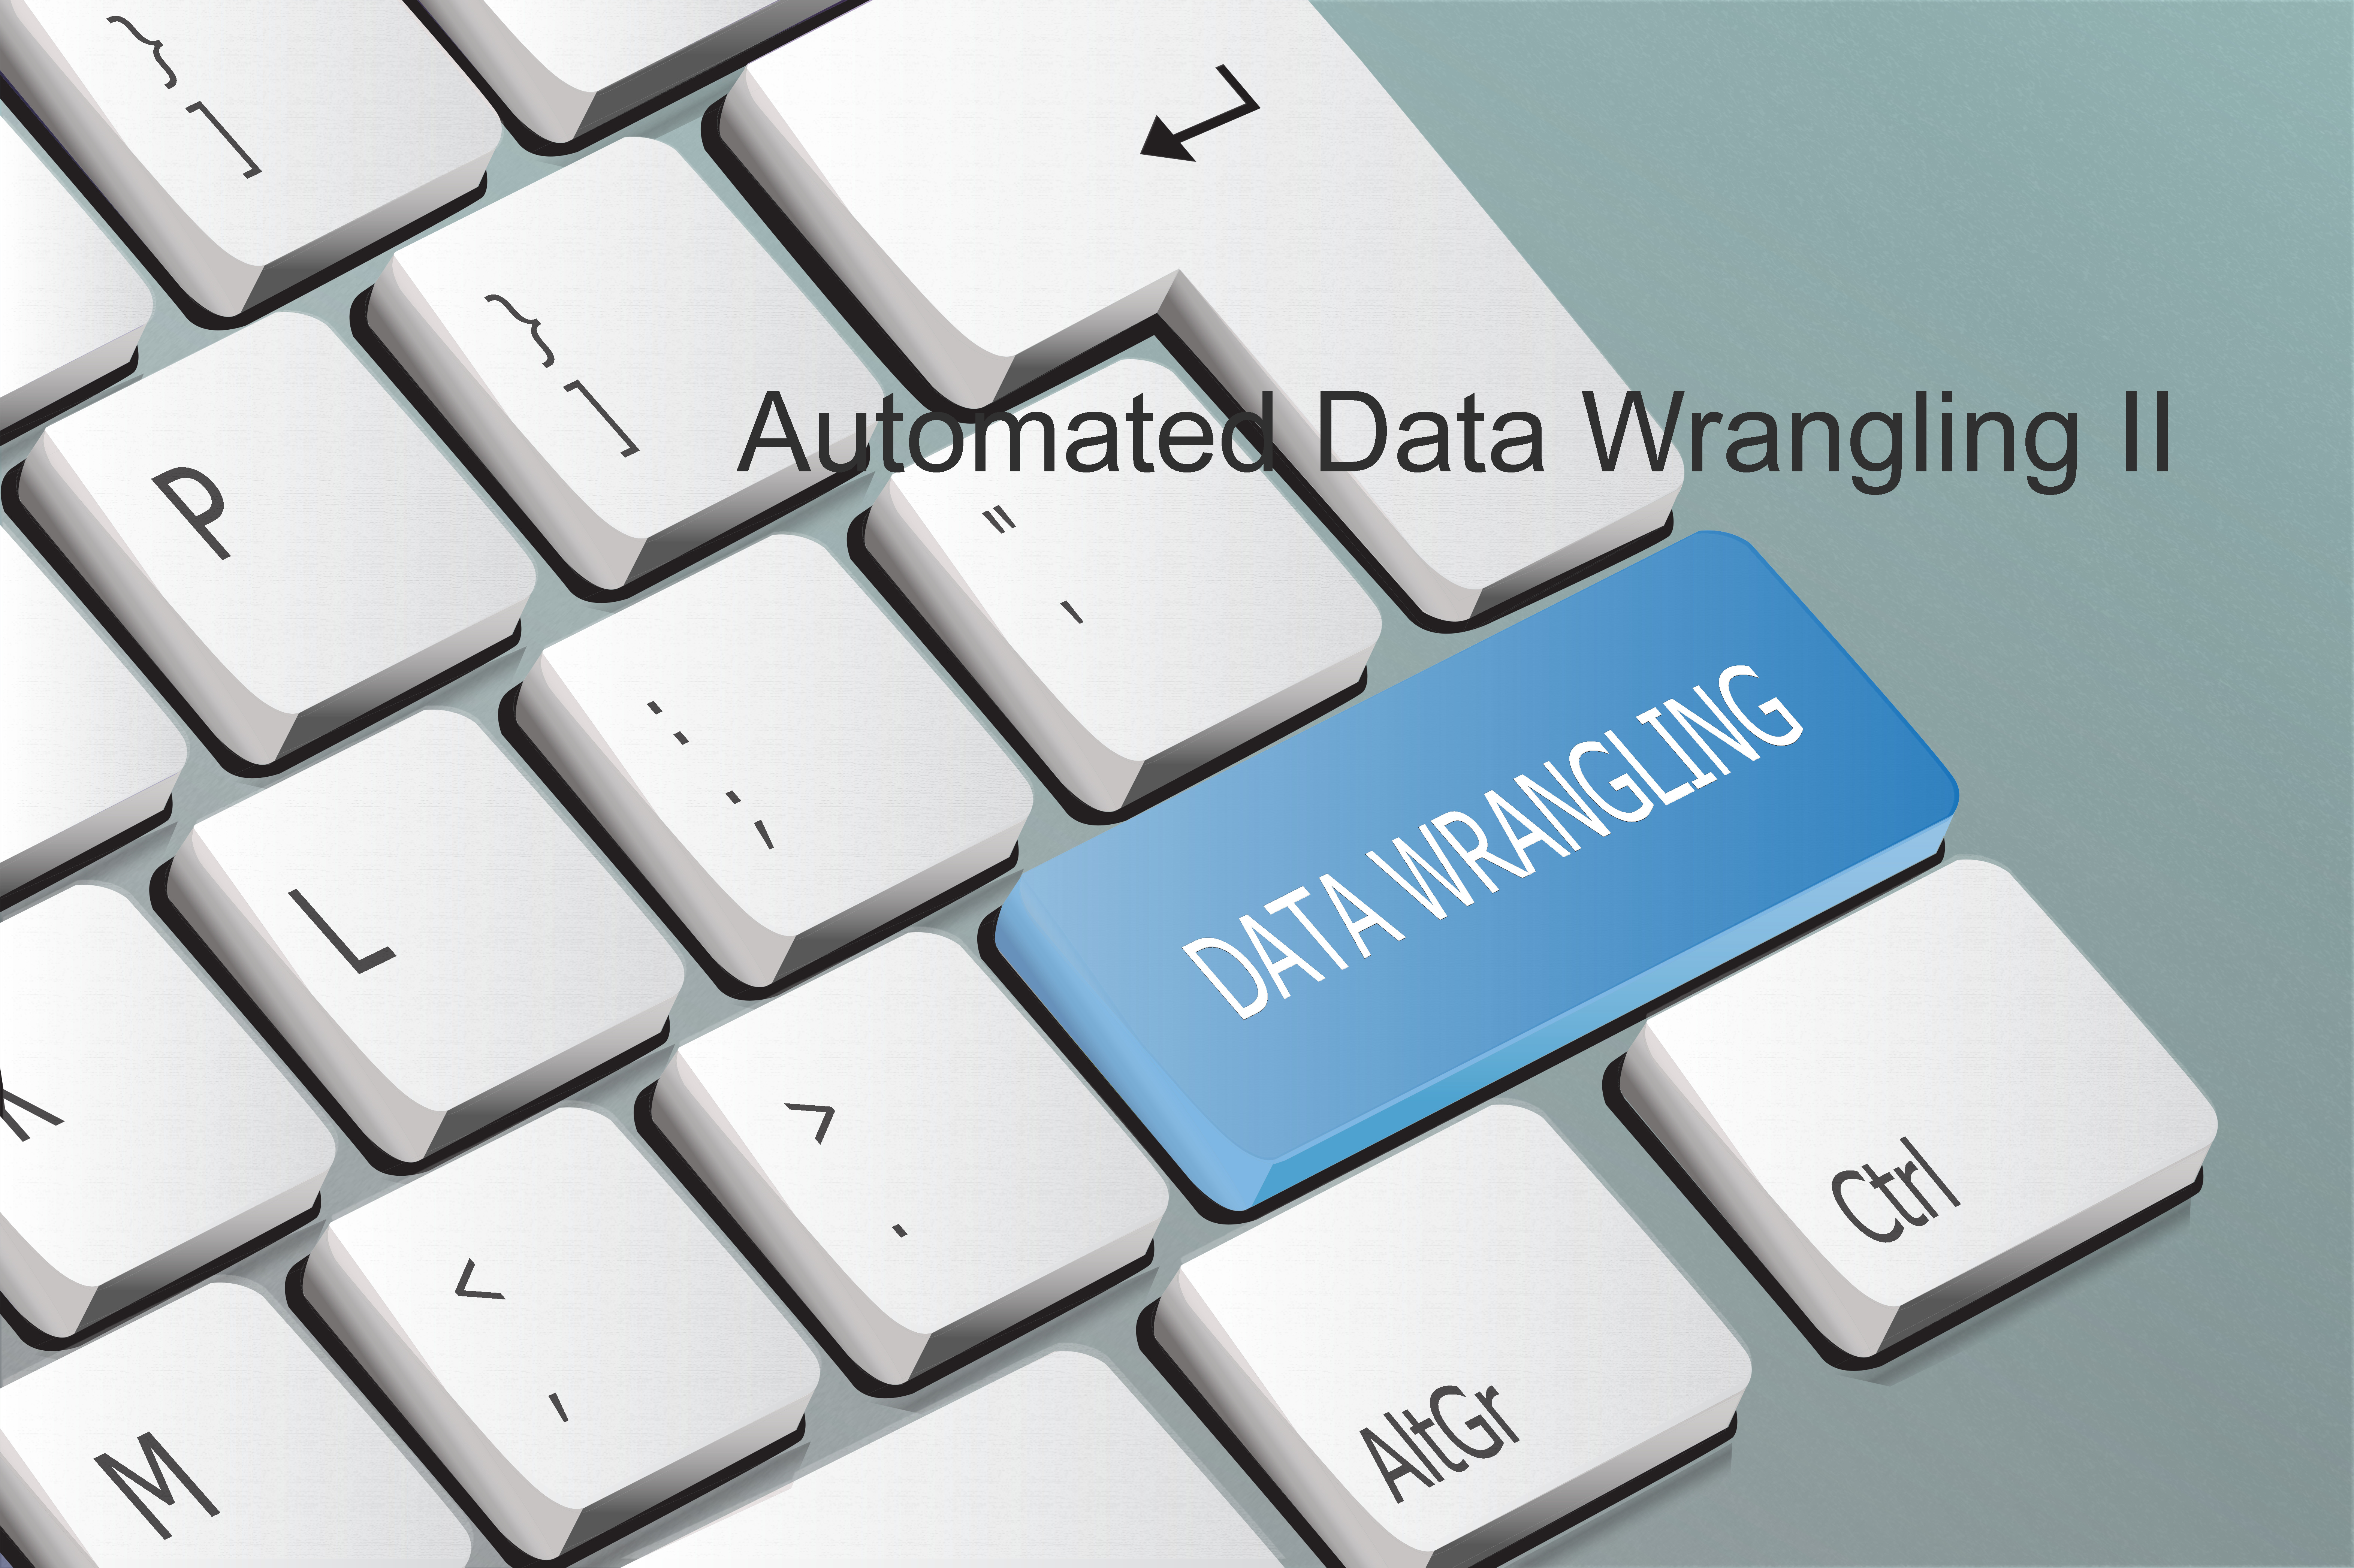 Automated Data Wrangling 2 - World of Data!